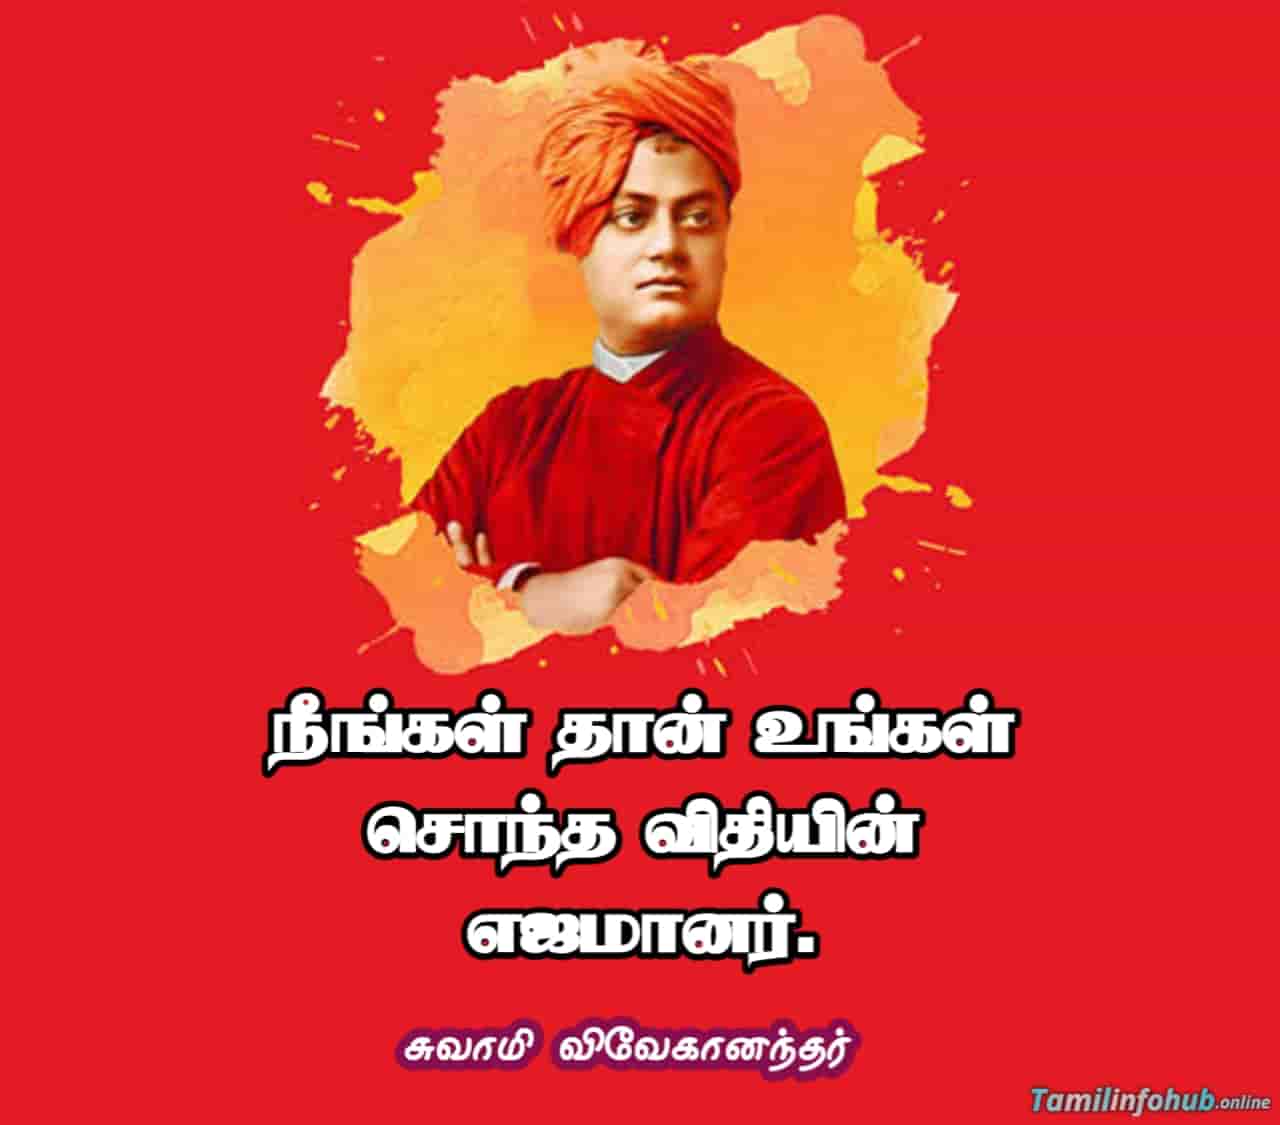 Vivekananda Tamil quotes images